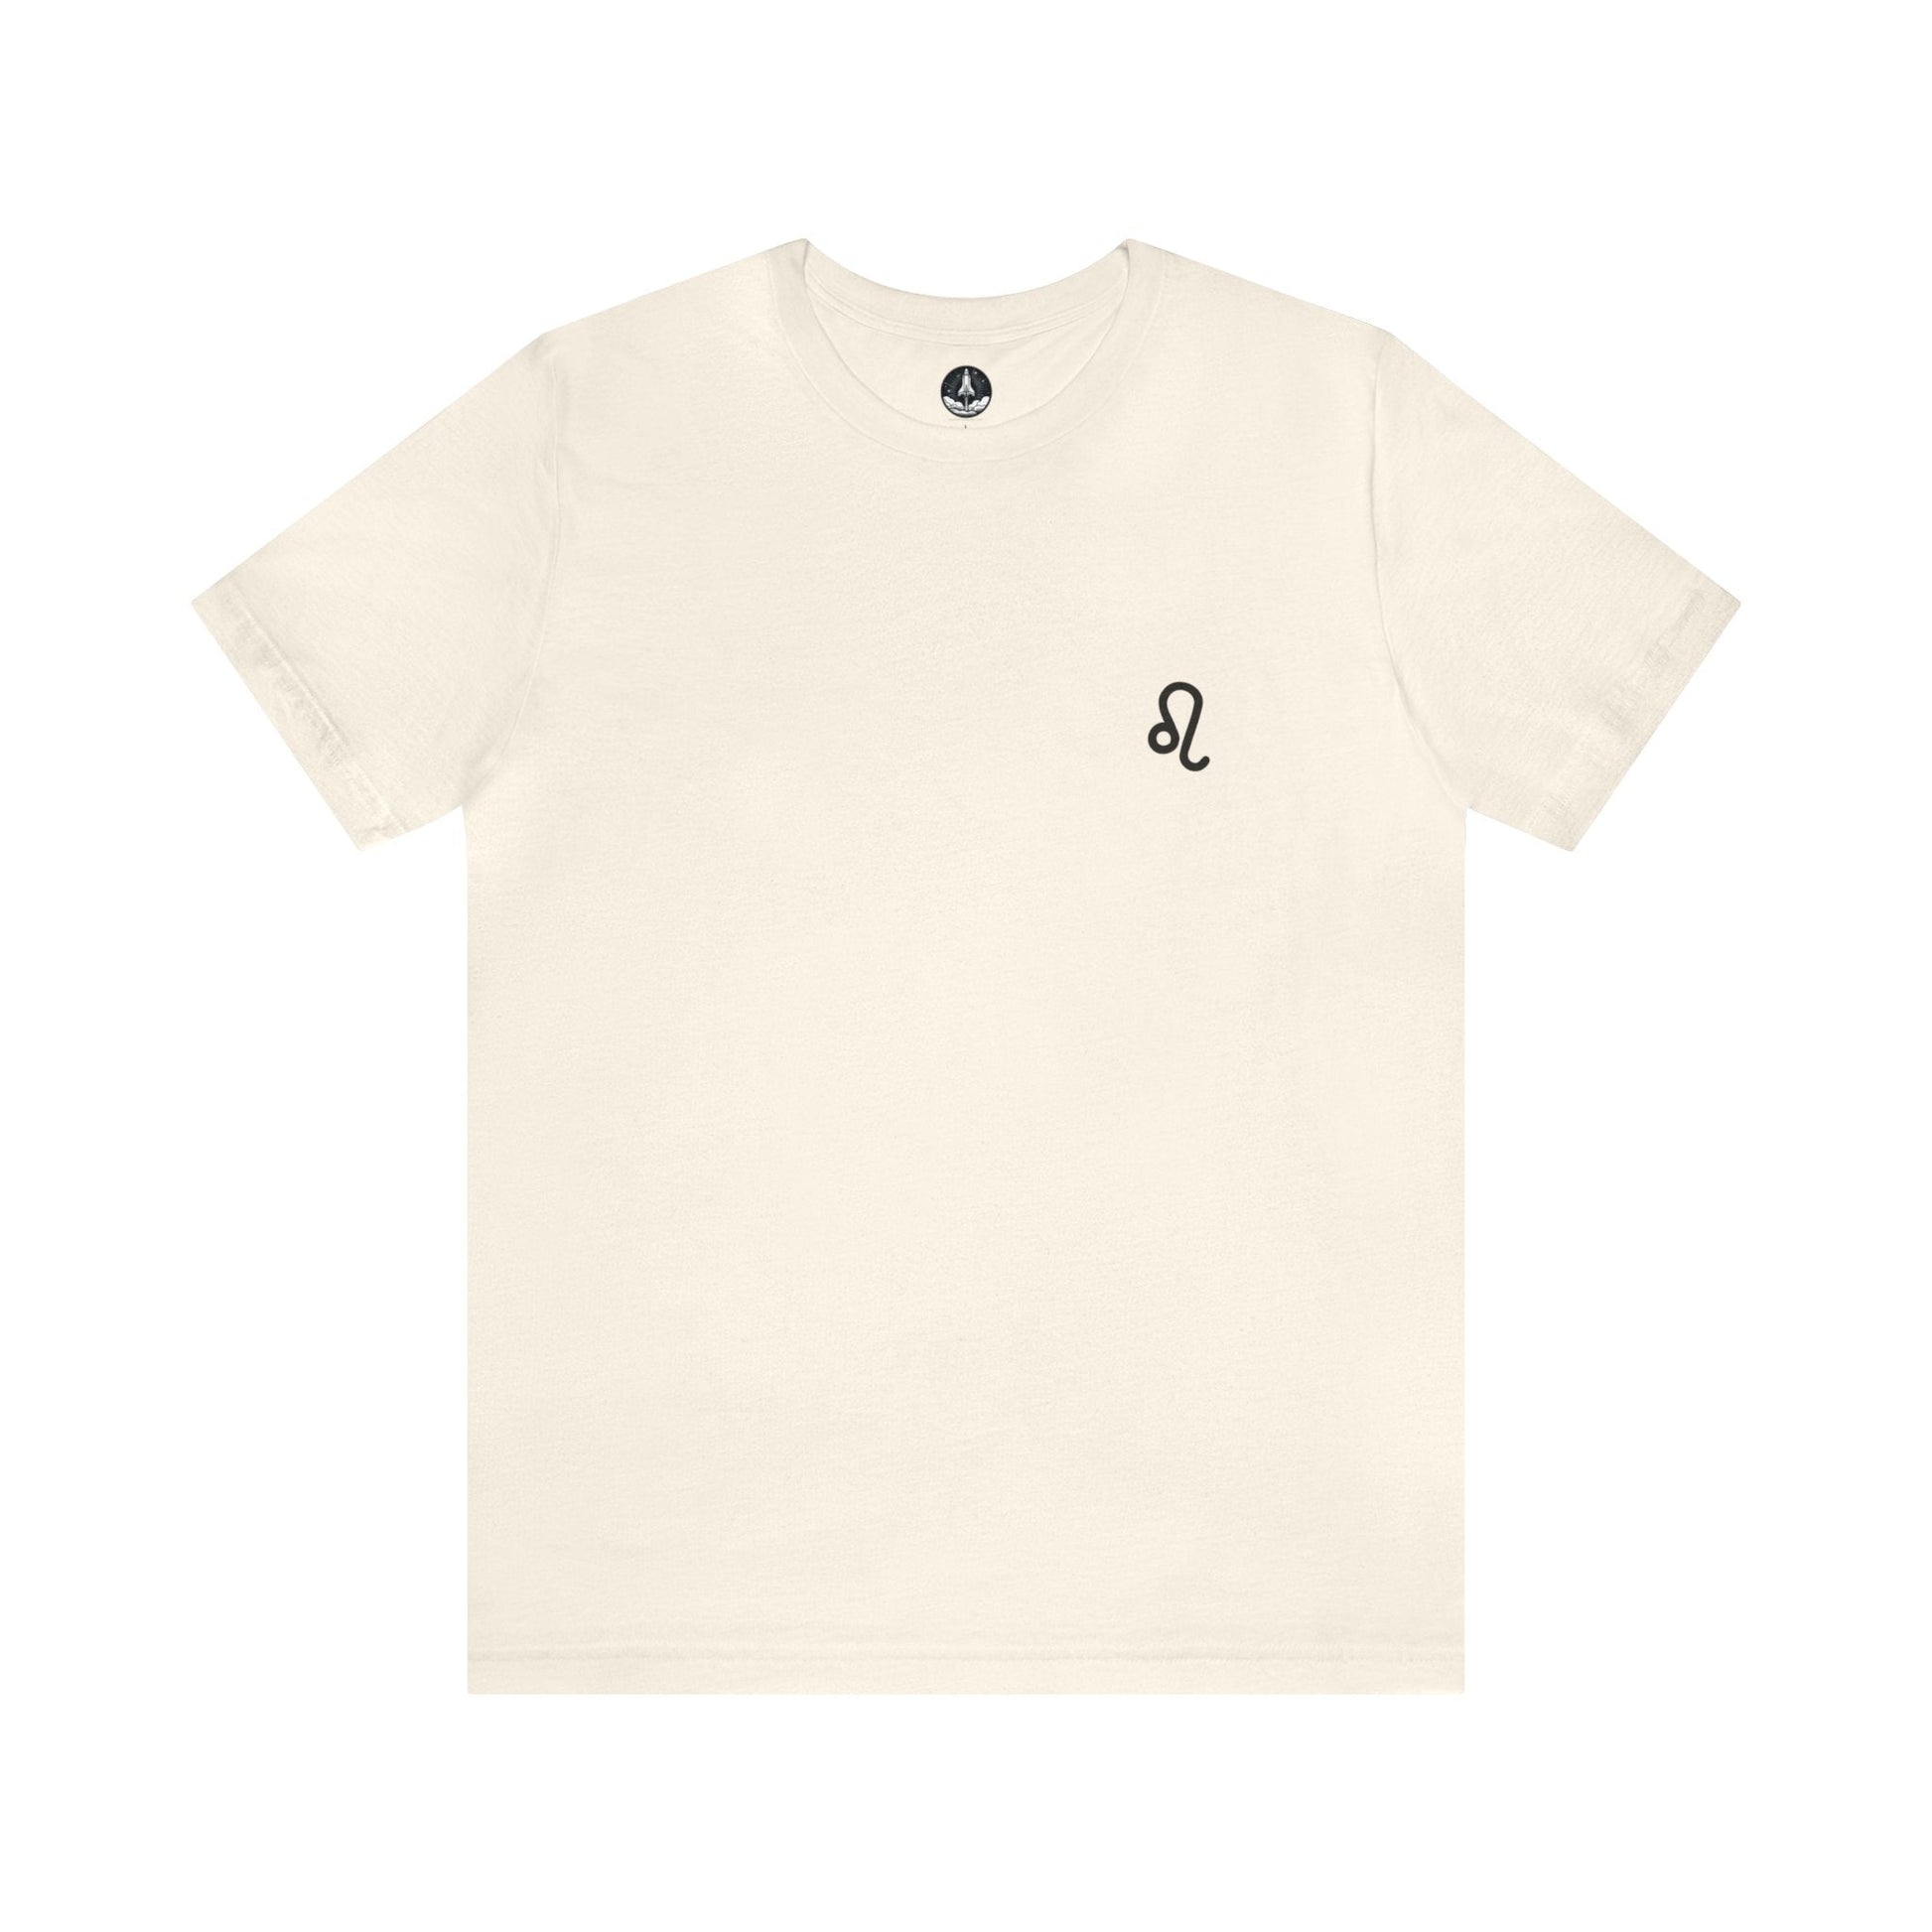 T-Shirt Natural / S Leo Minimalist Majesty T-Shirt: Bold Elegance for the Zodiac King